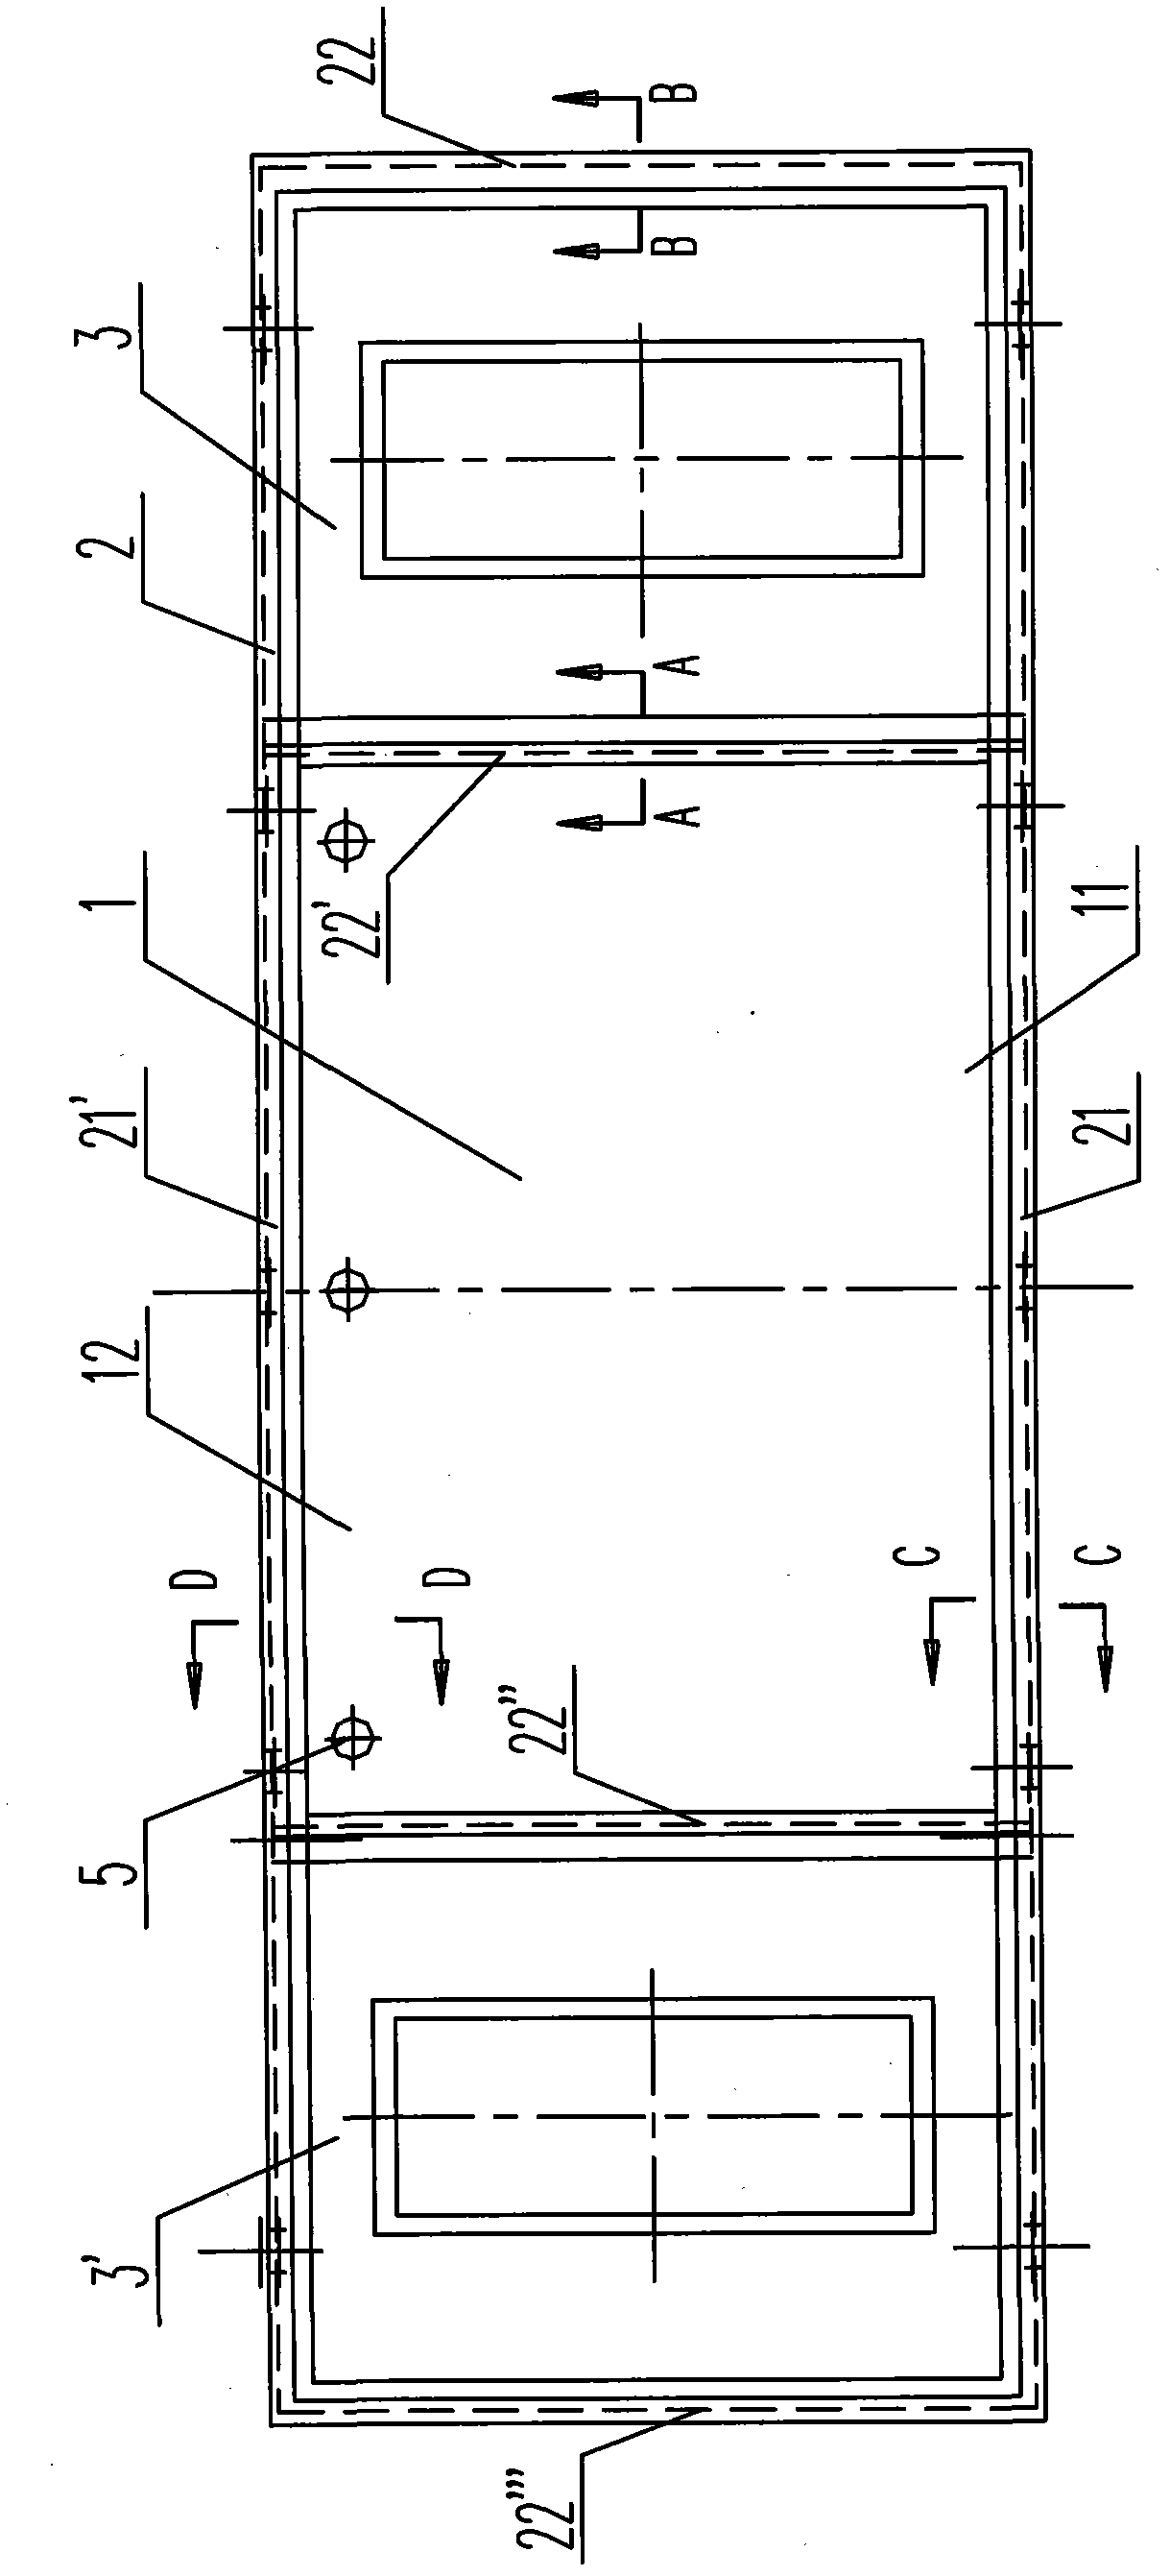 Method for installing modular flat top plate of railway passenger car